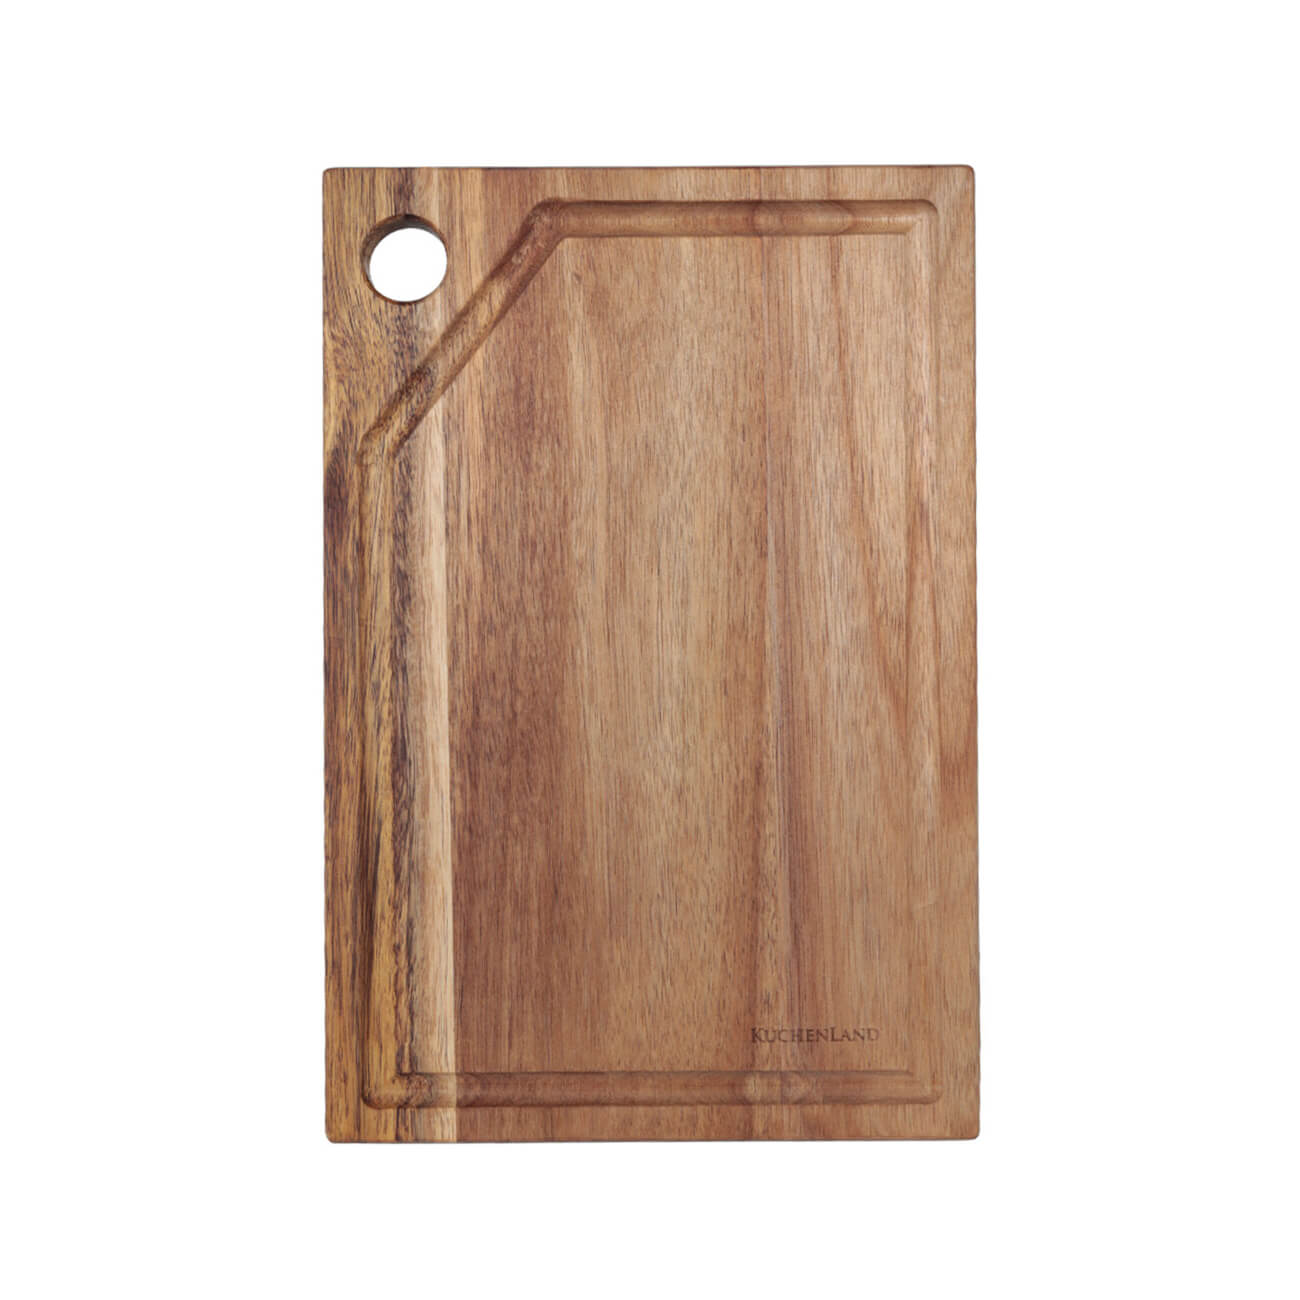 Cutting board, 30x20 cm, rectangular, wood, Noble tree изображение № 1